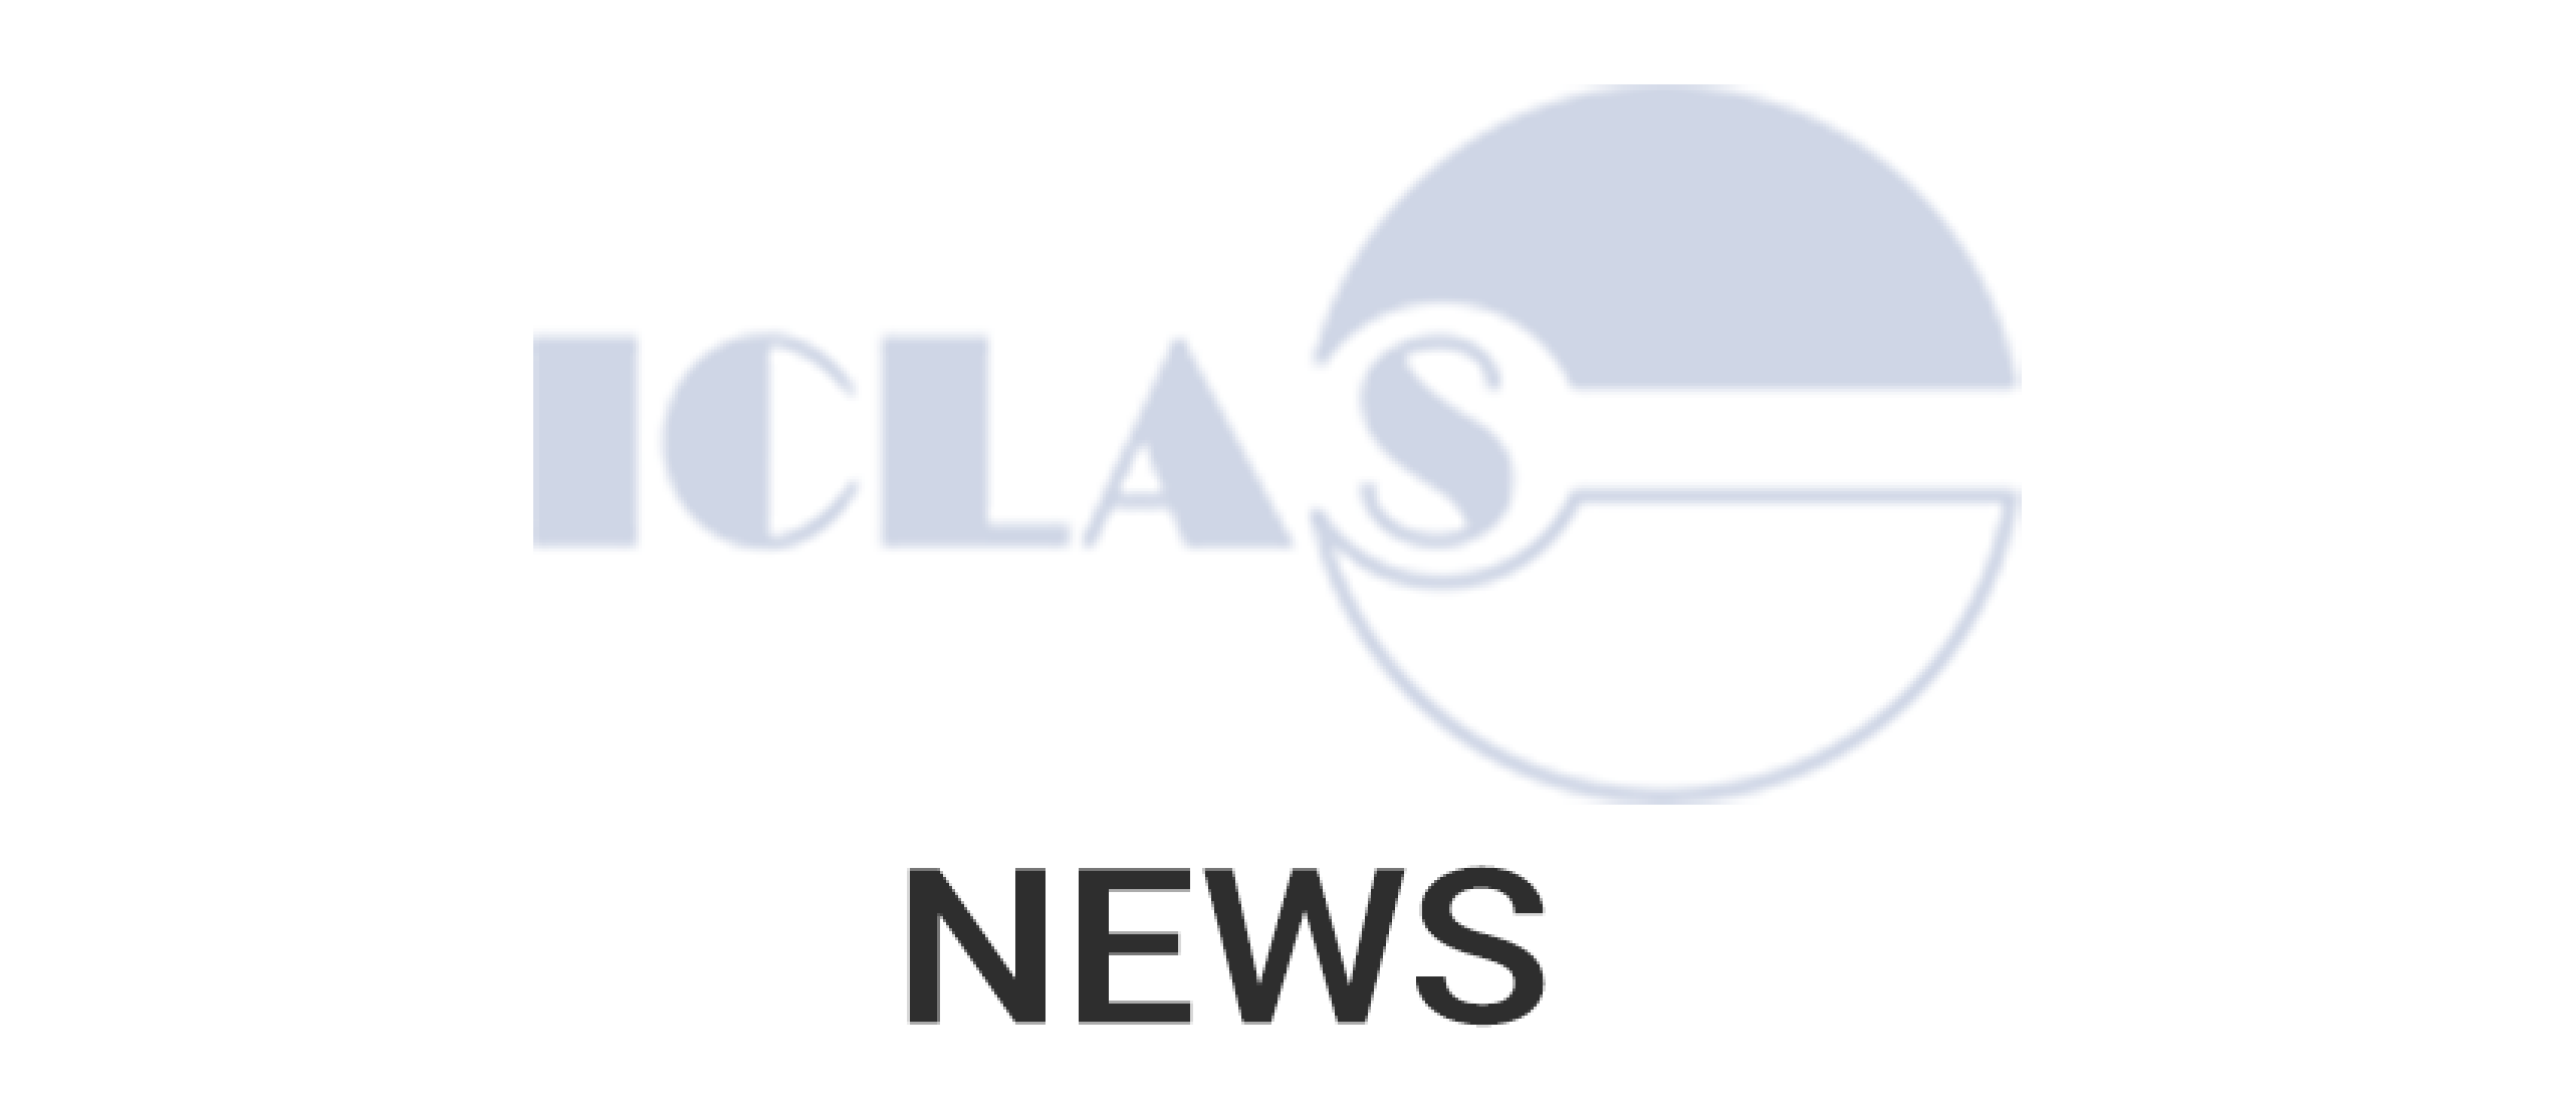 ICLAS News Report December 2022